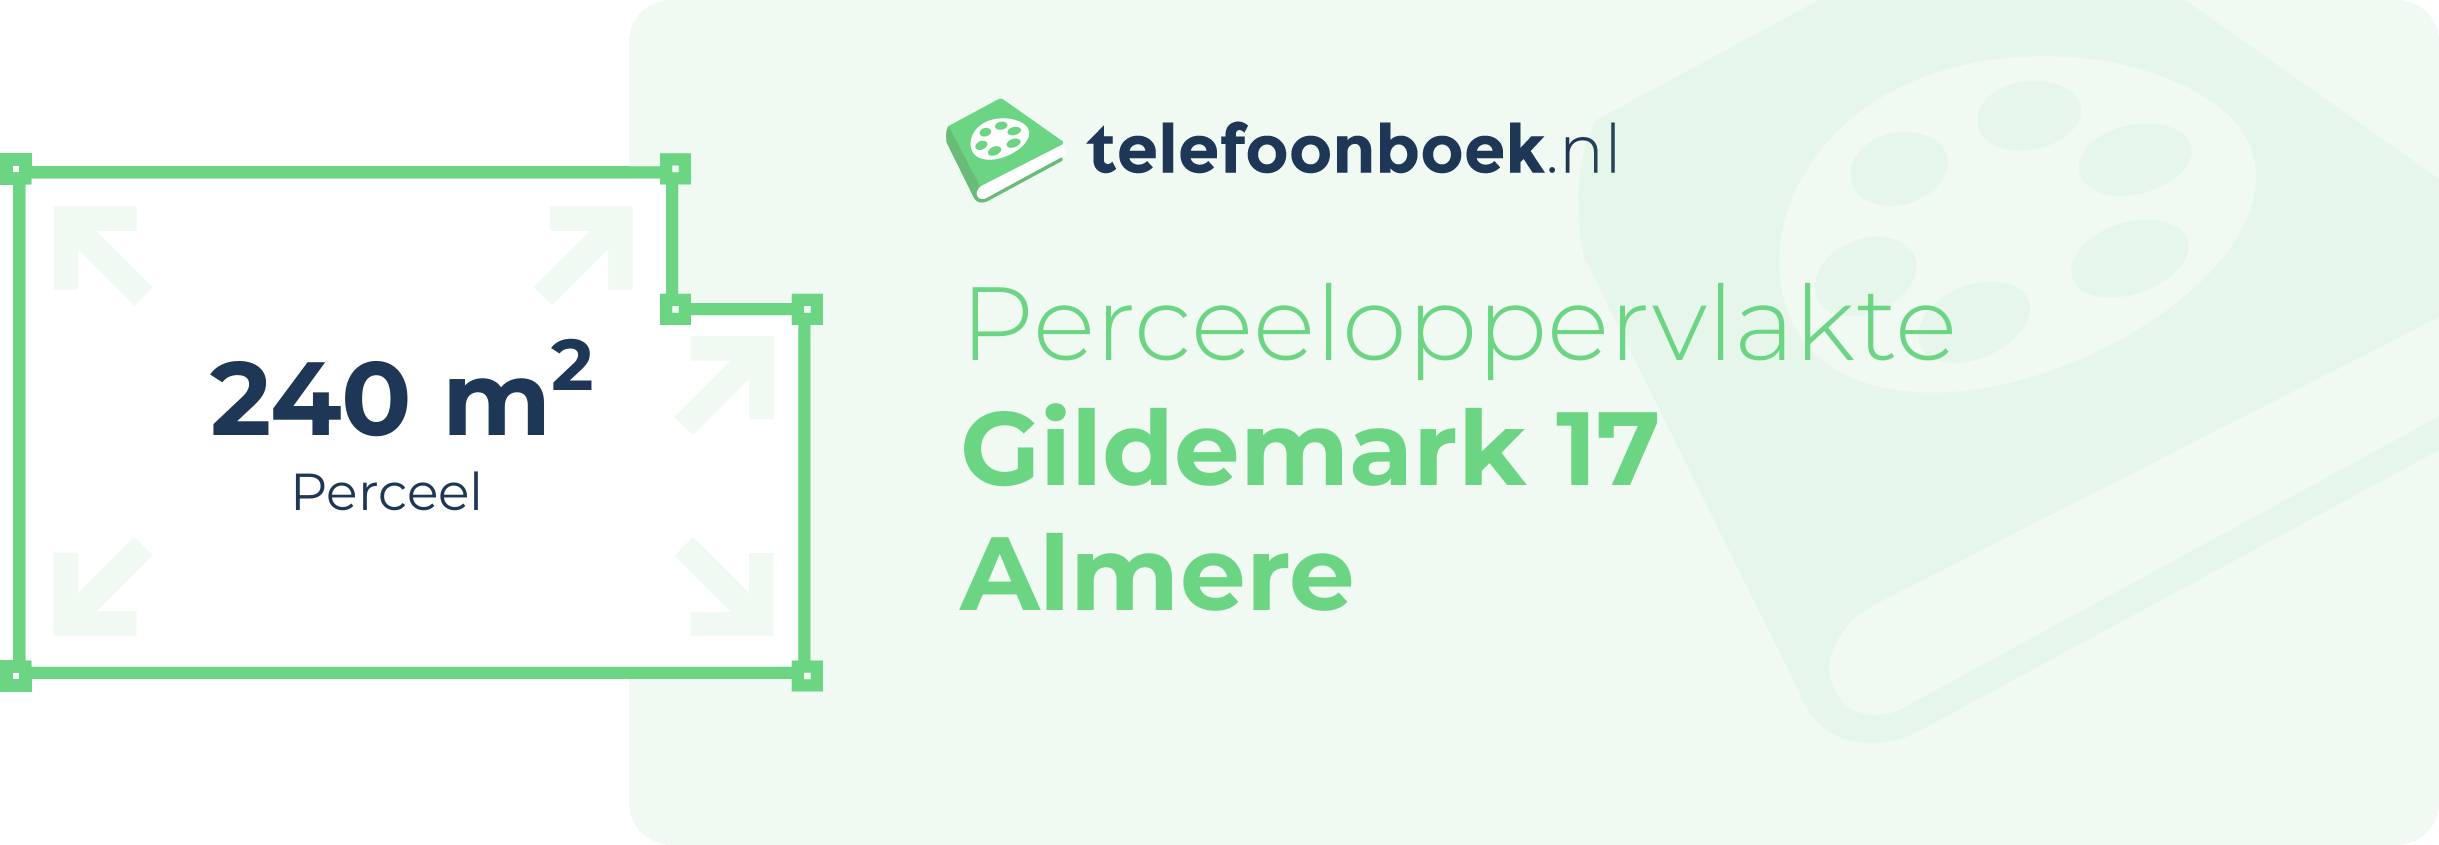 Perceeloppervlakte Gildemark 17 Almere